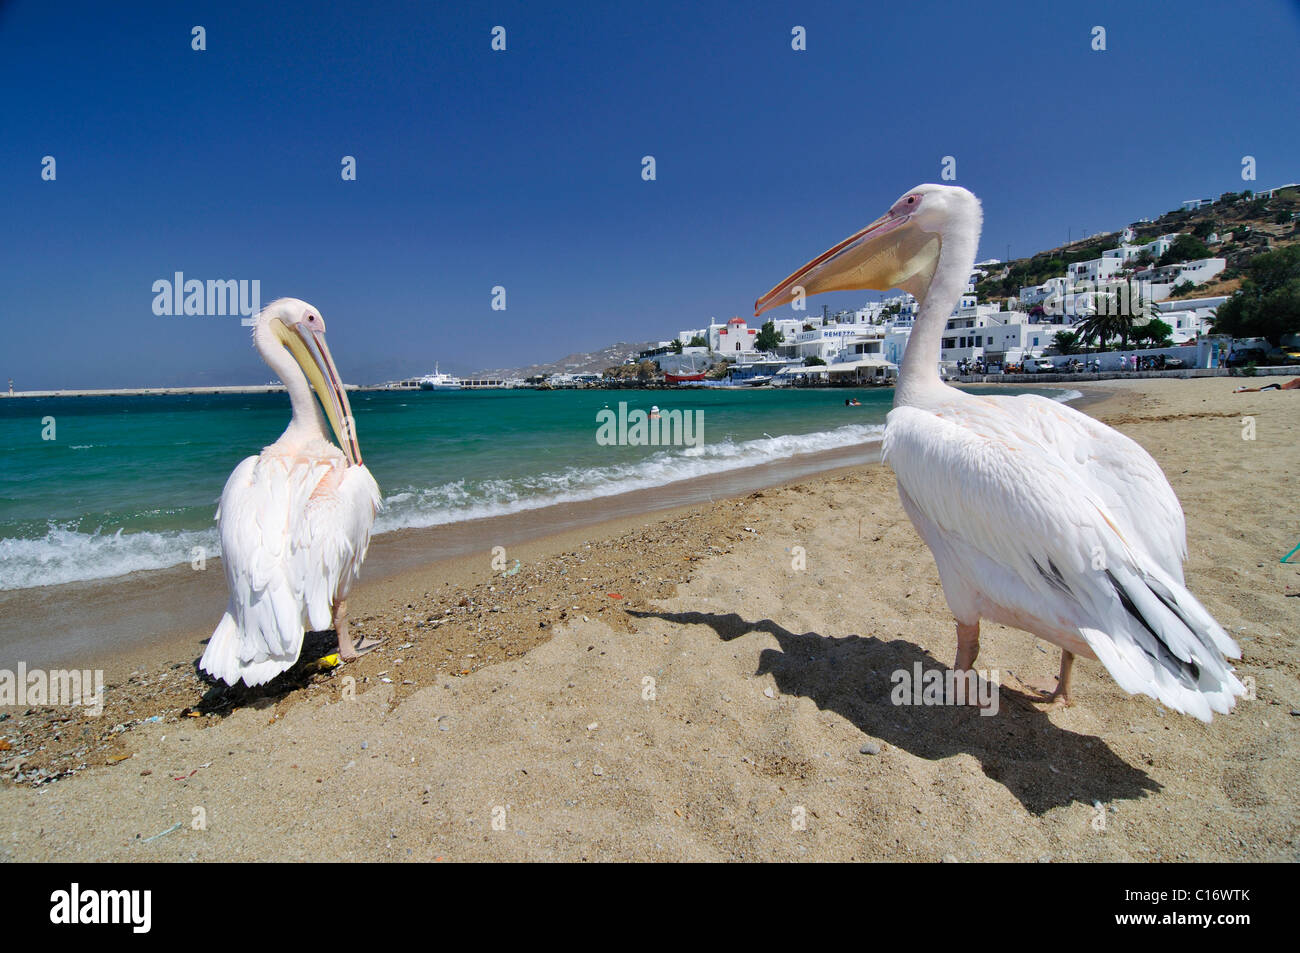 Berühmte Touristenattraktion, zwei Pelikane am Strand direkt am türkisfarbenen Meer, Mykonos, Kykladen, Griechenland, Europa Stockfoto